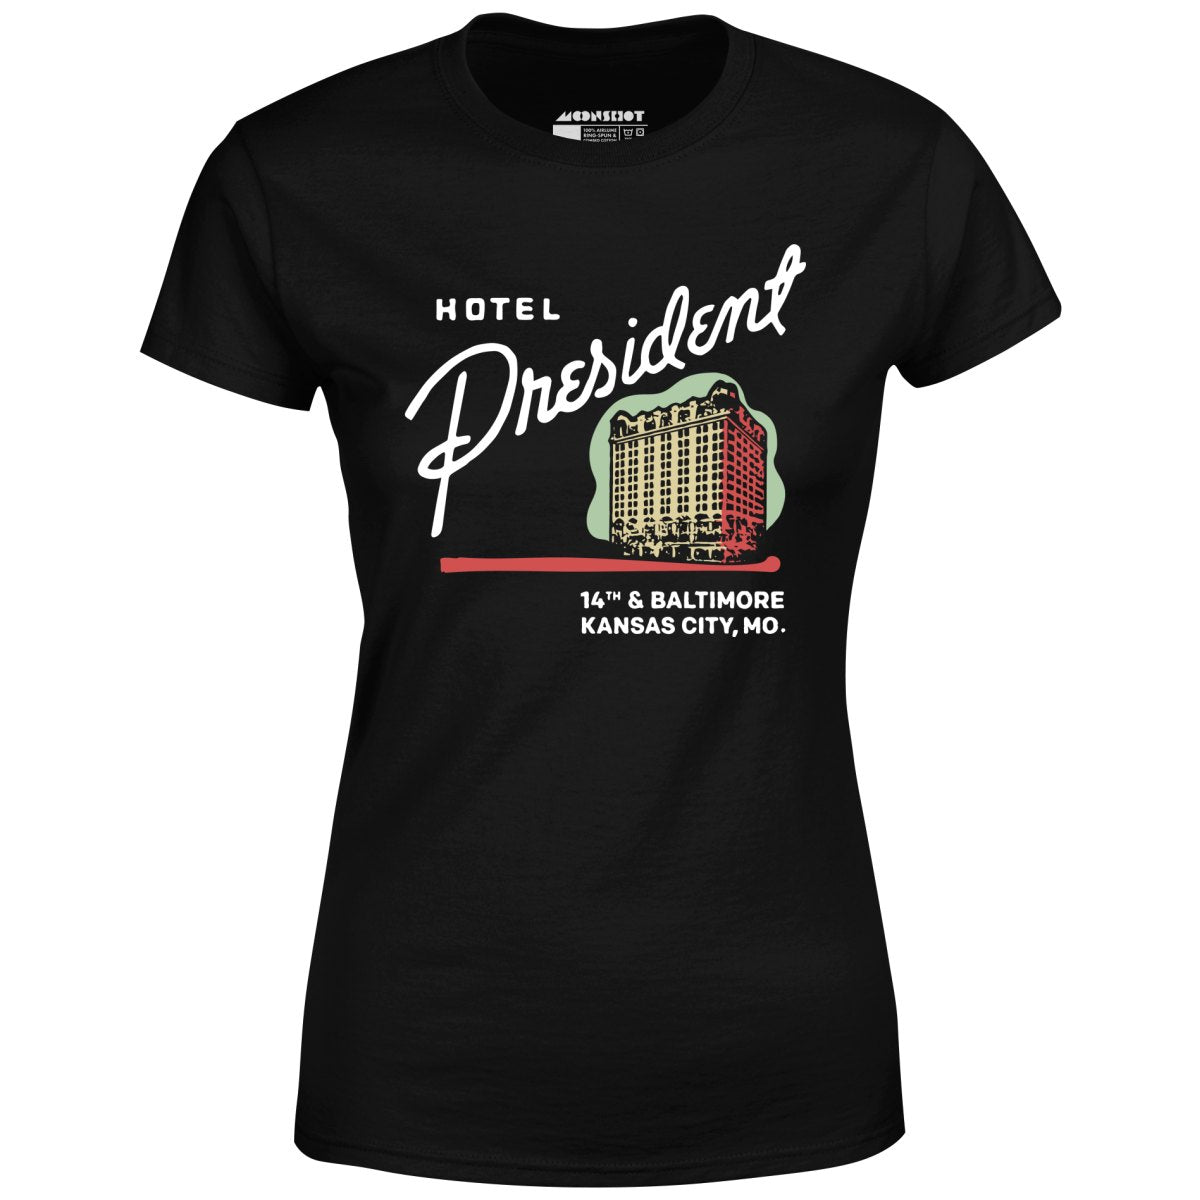 Hotel President - Kansas City, MO - Vintage Hotel - Women's T-Shirt